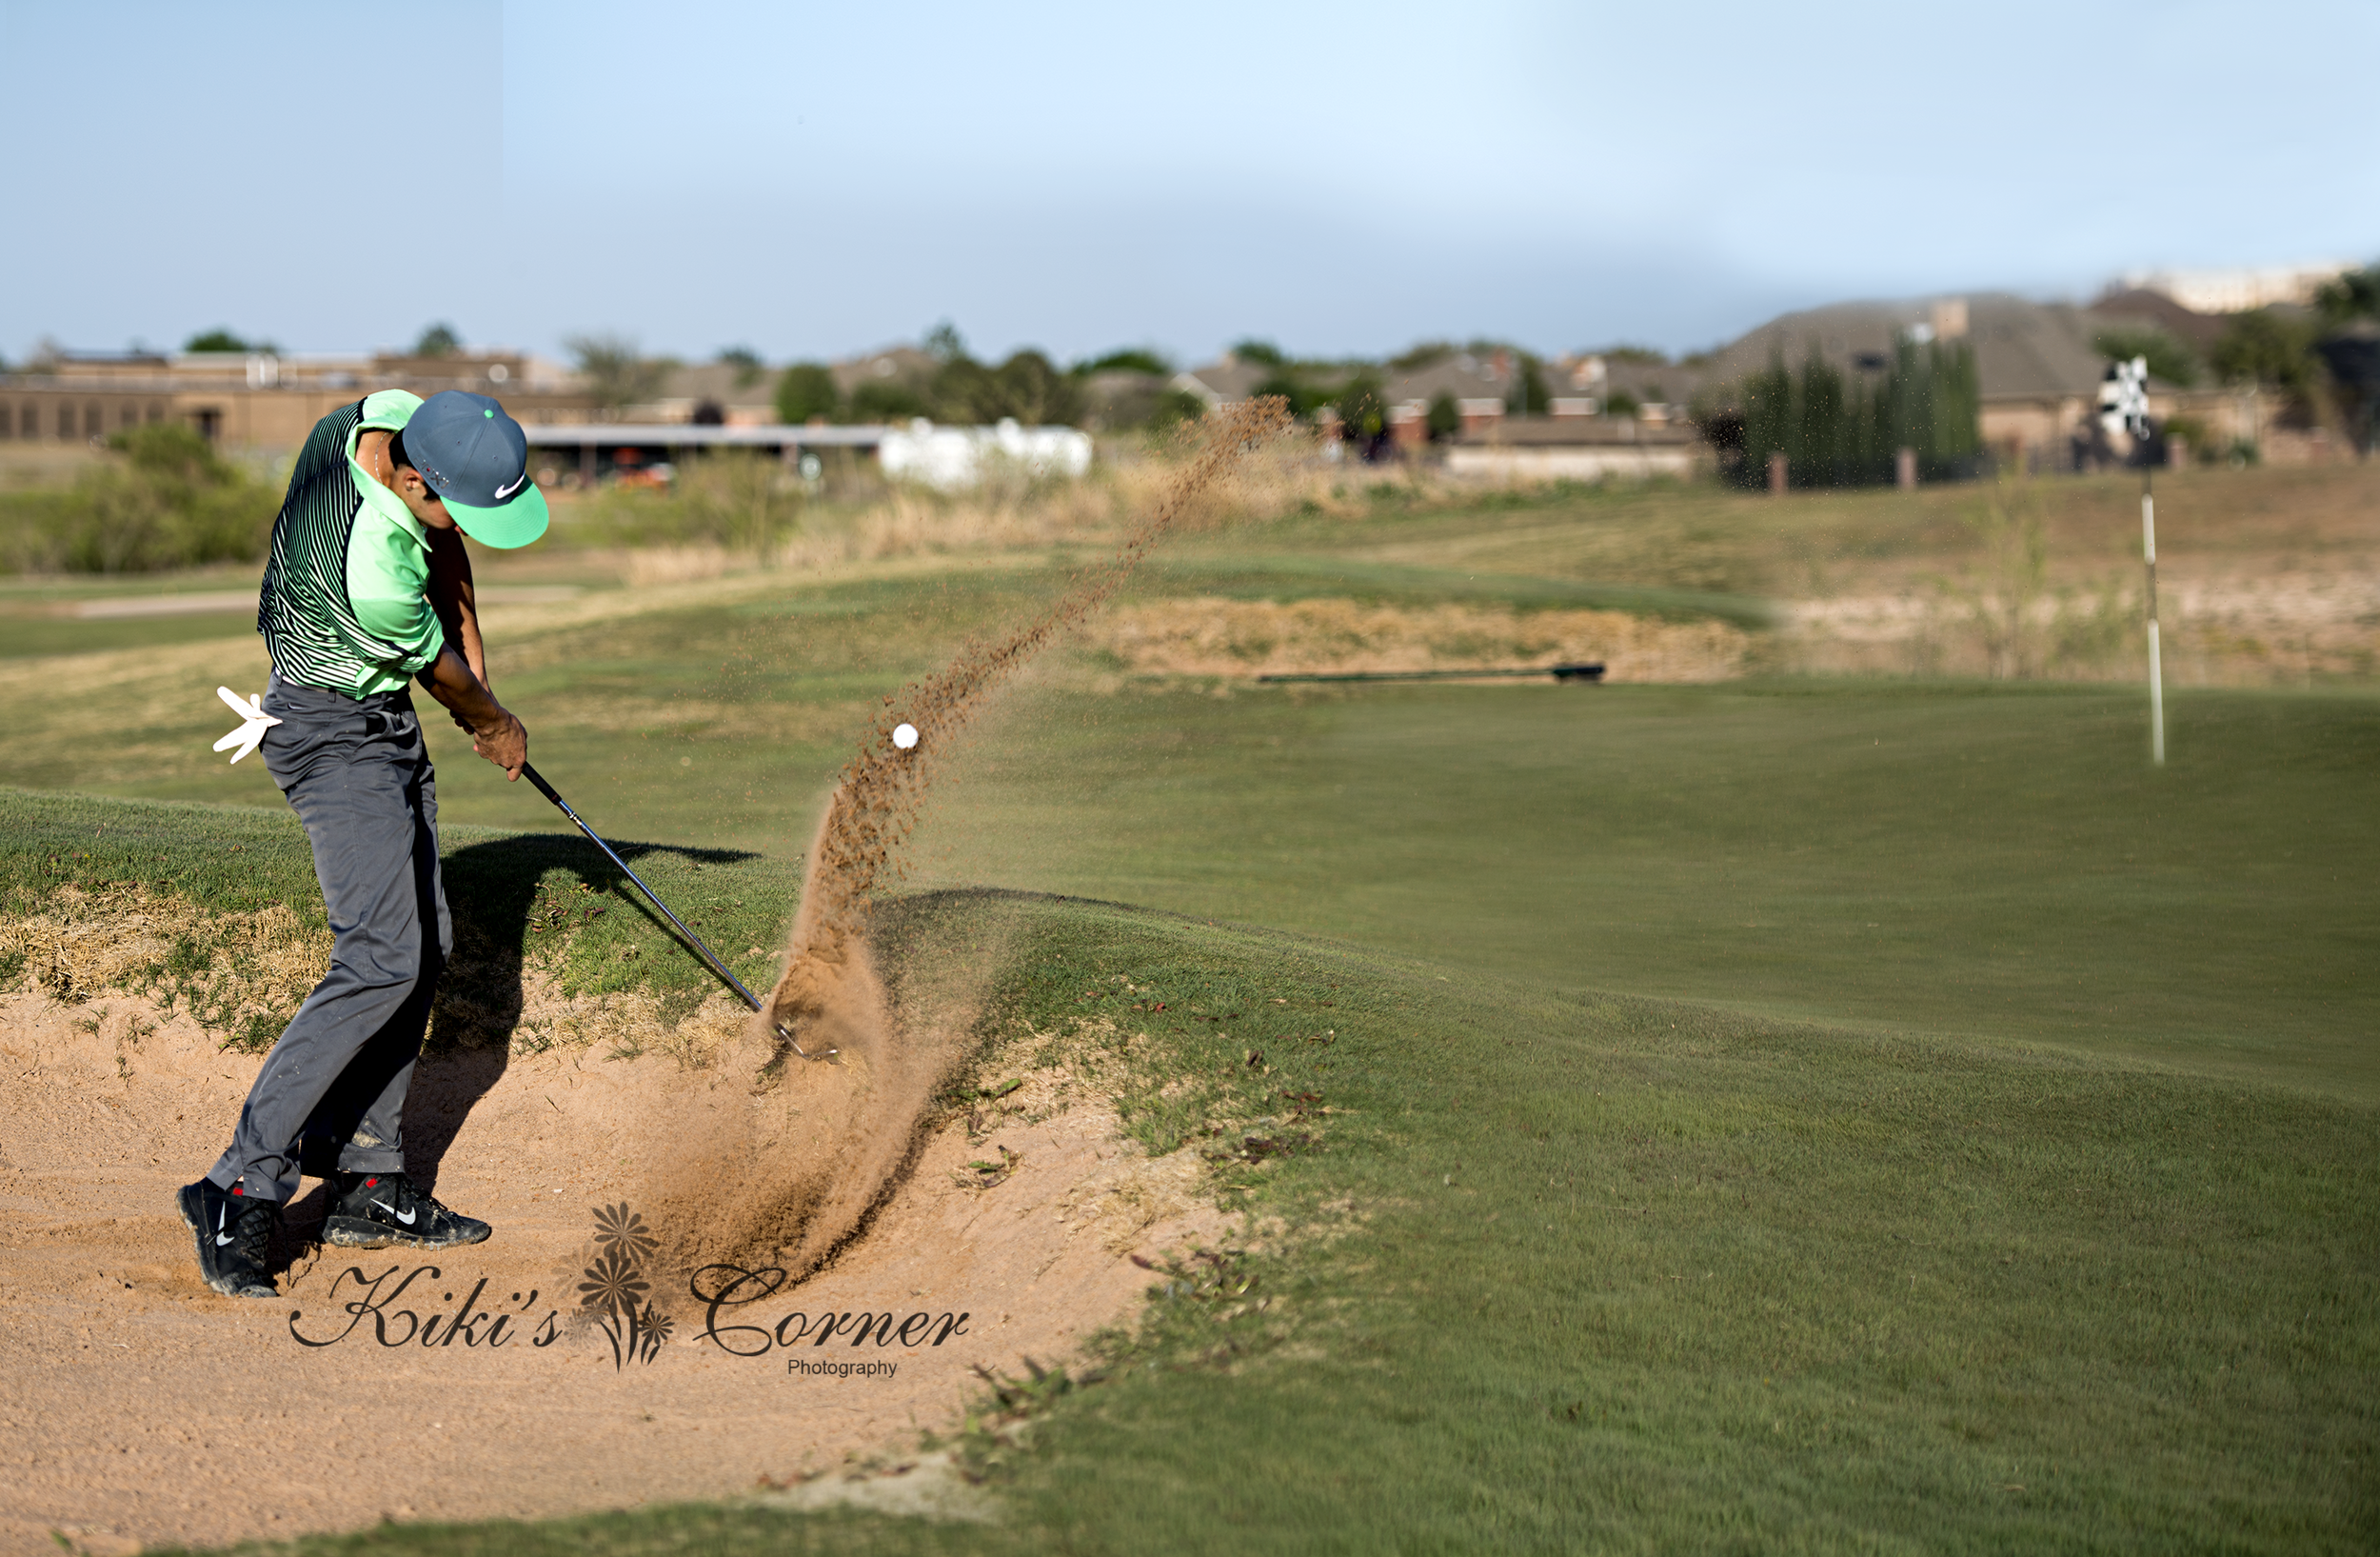 golfing, senior guy golfing, sand trap, awesome sand motion, golf magazine cover